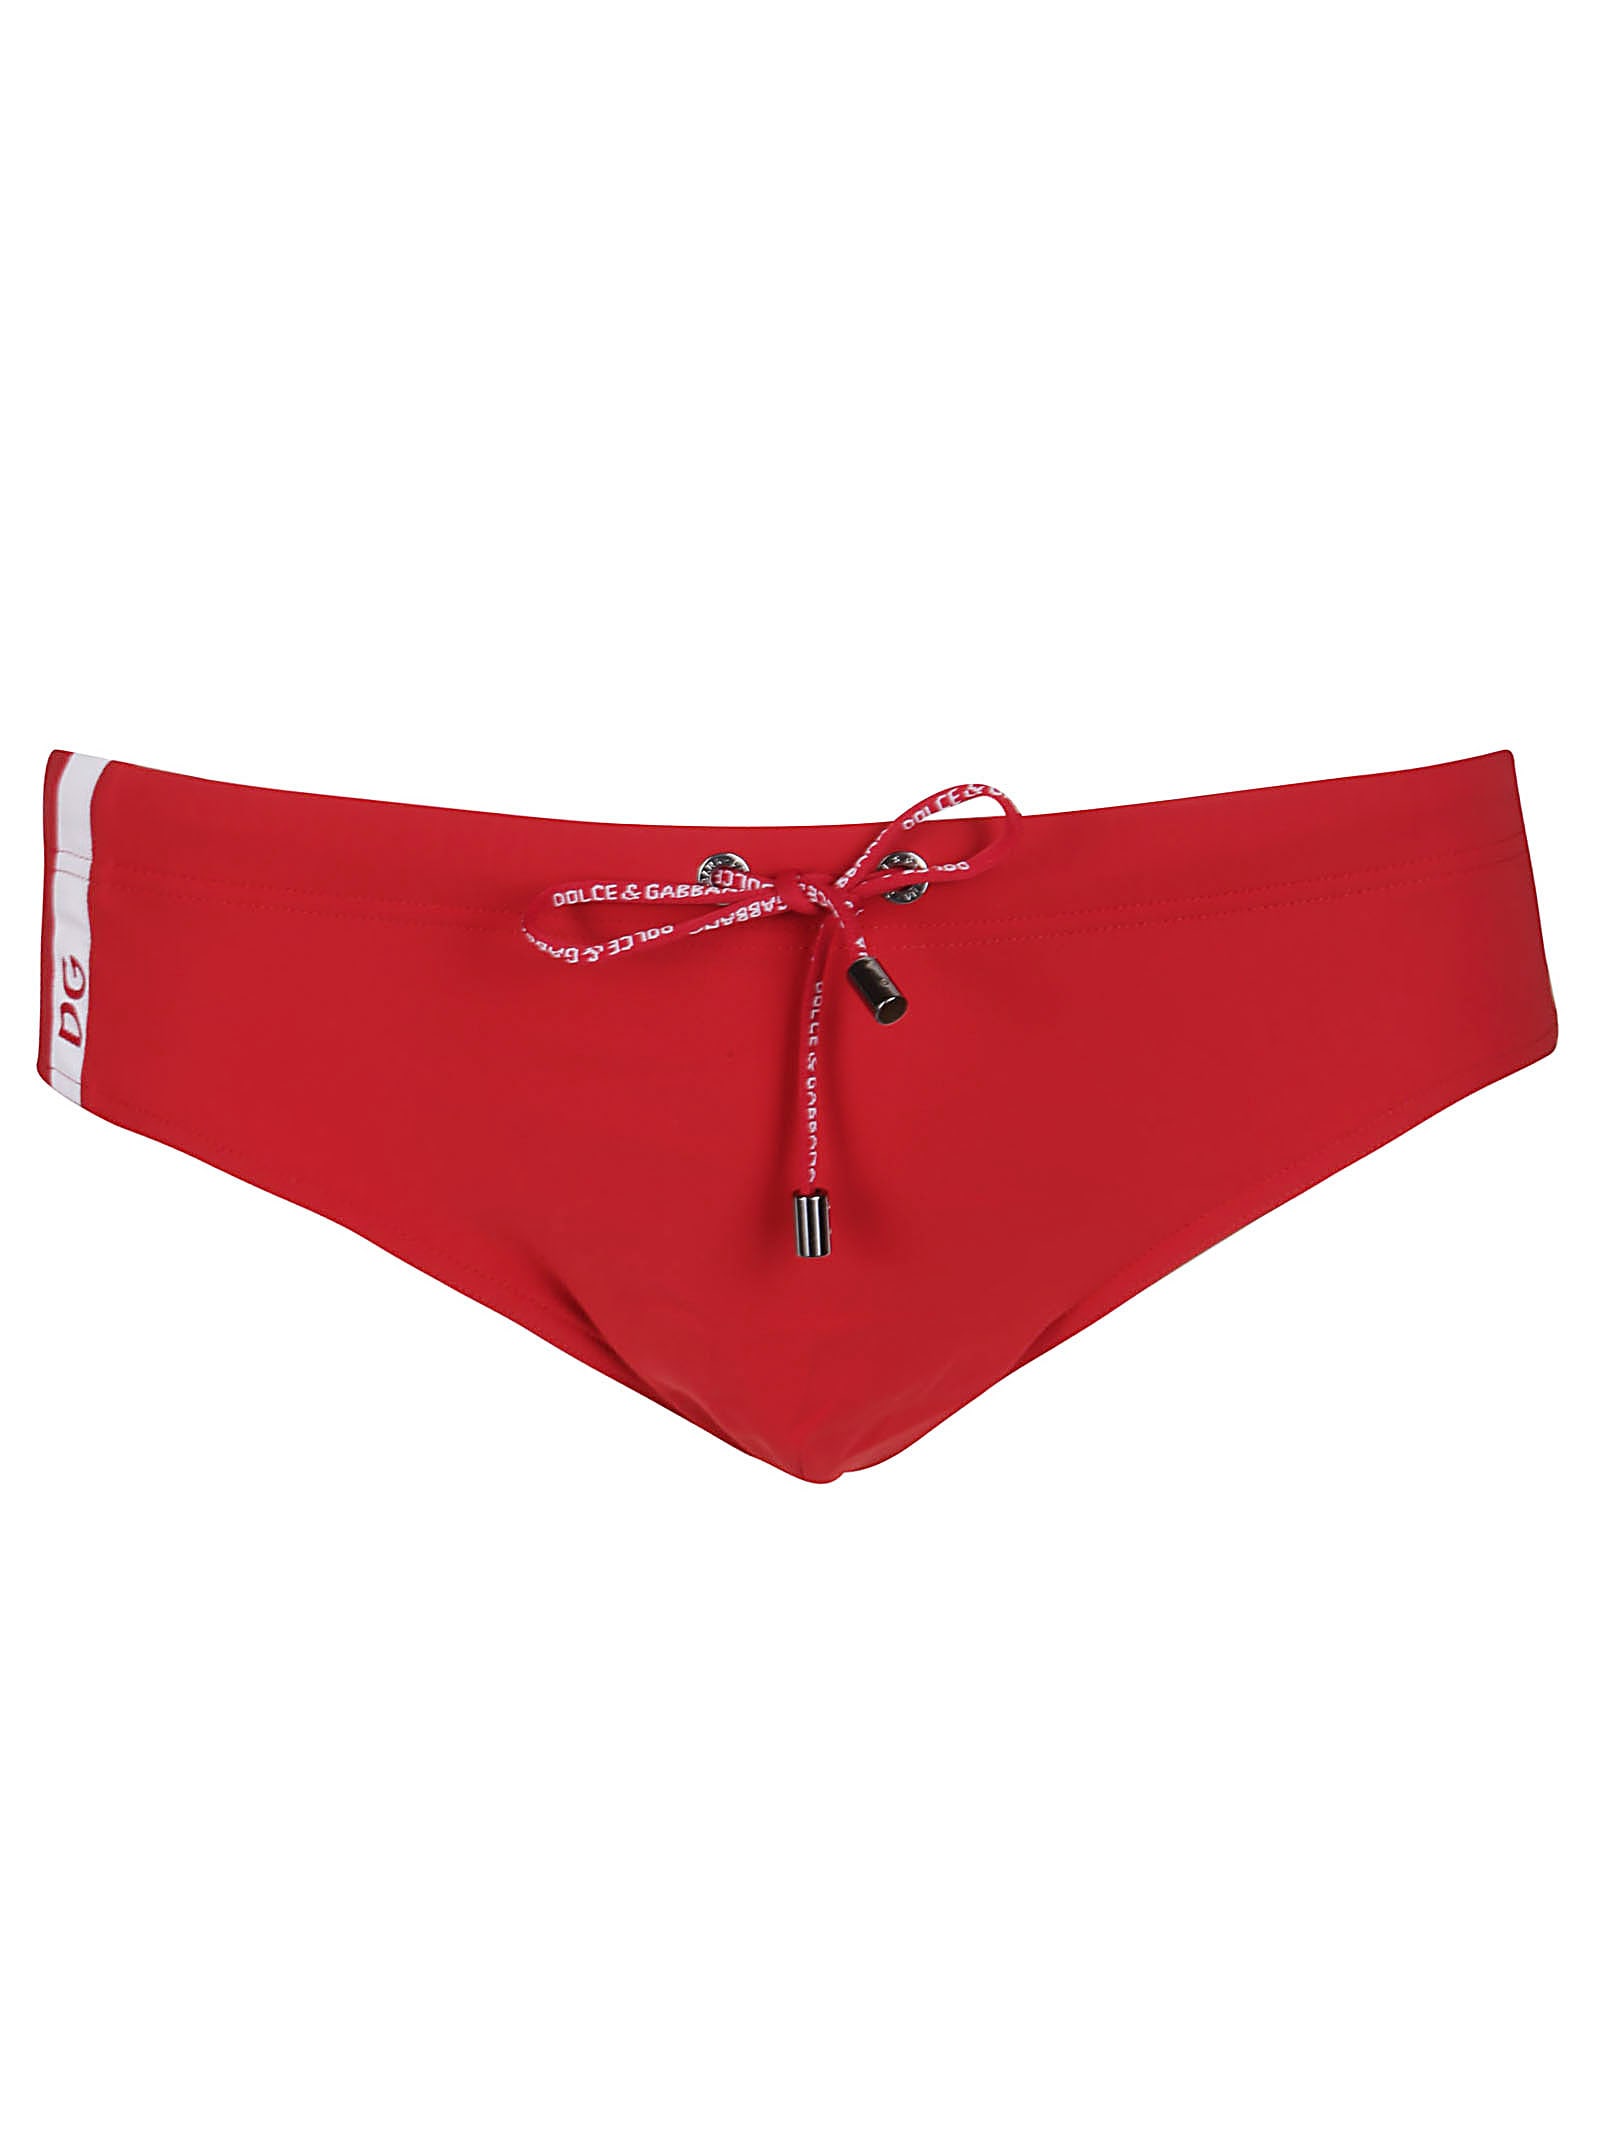 Dolce & Gabbana Red Swimming Trunks